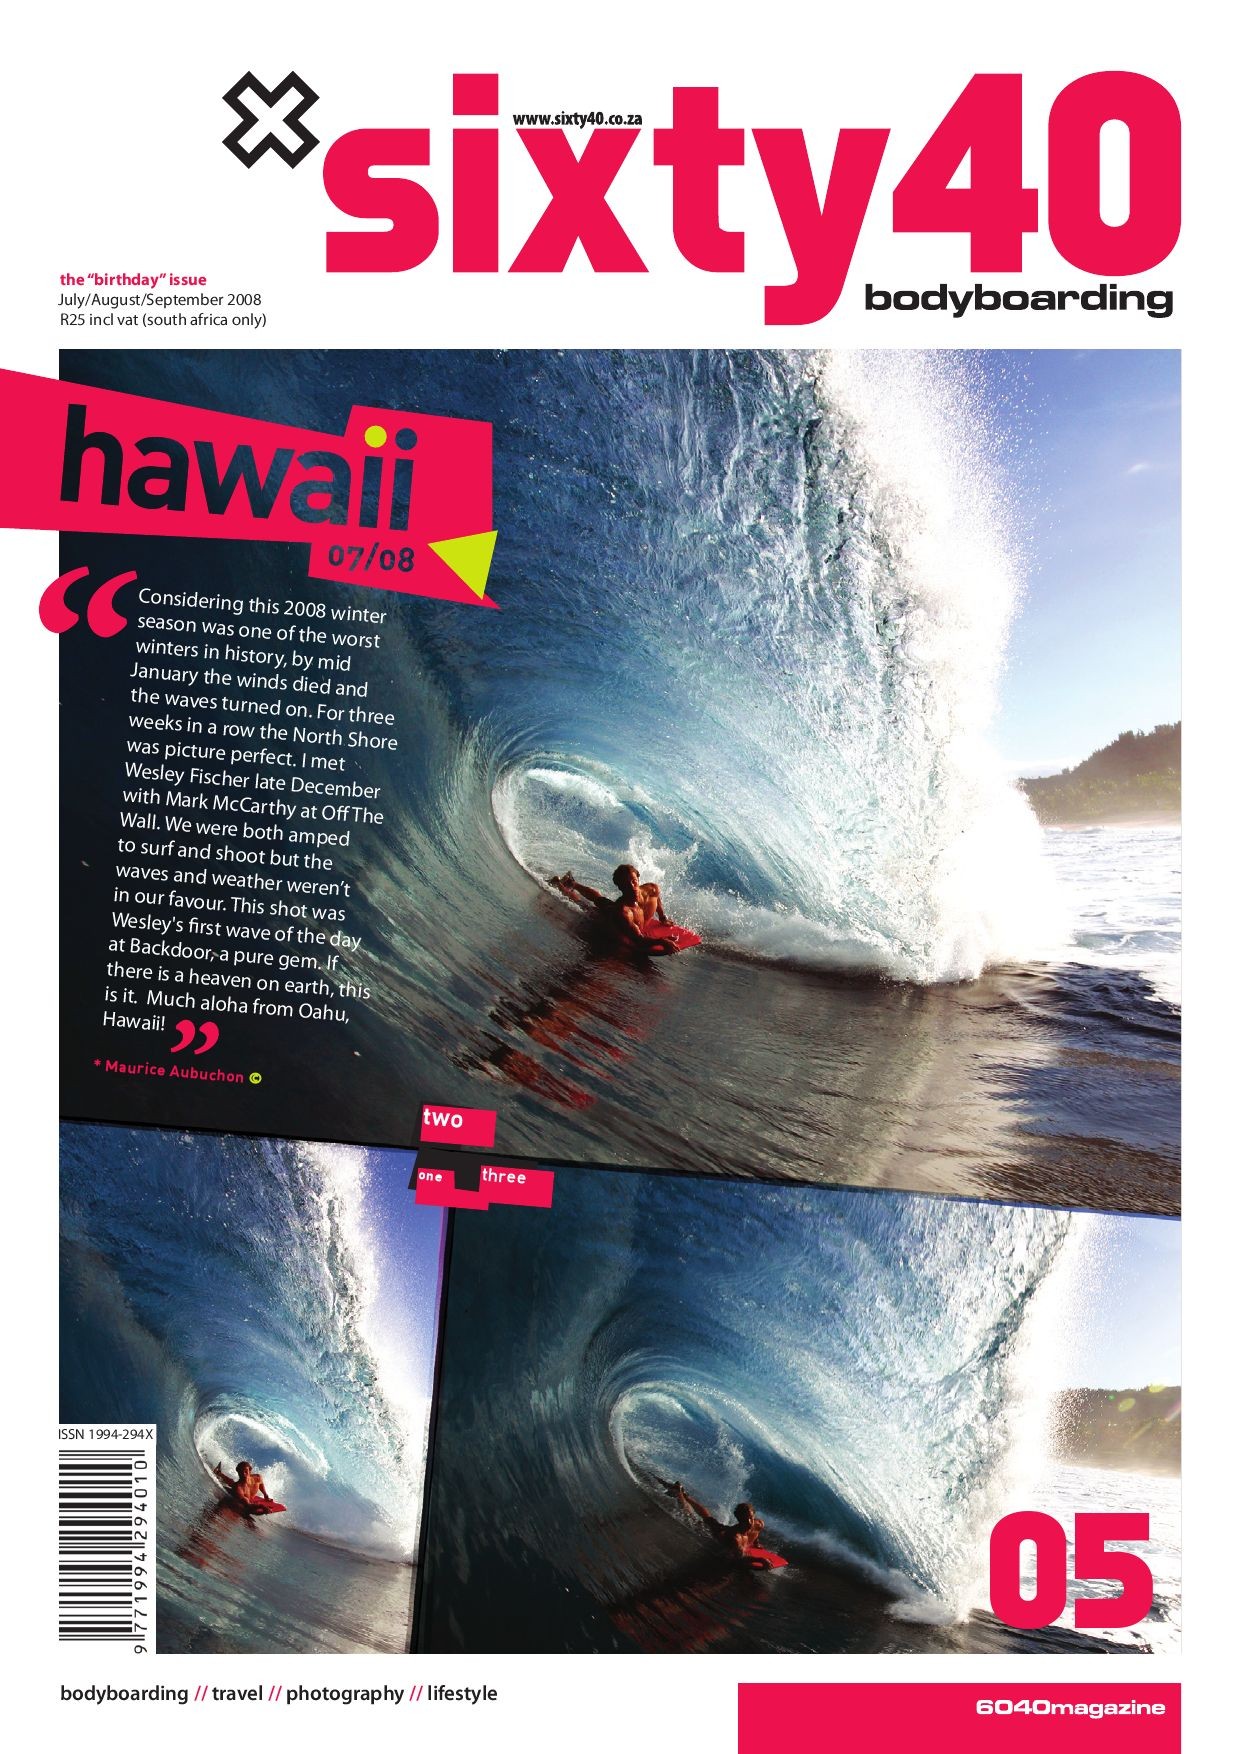 Sixty40 Bodyboarding Magazine - issue #05 - page 1